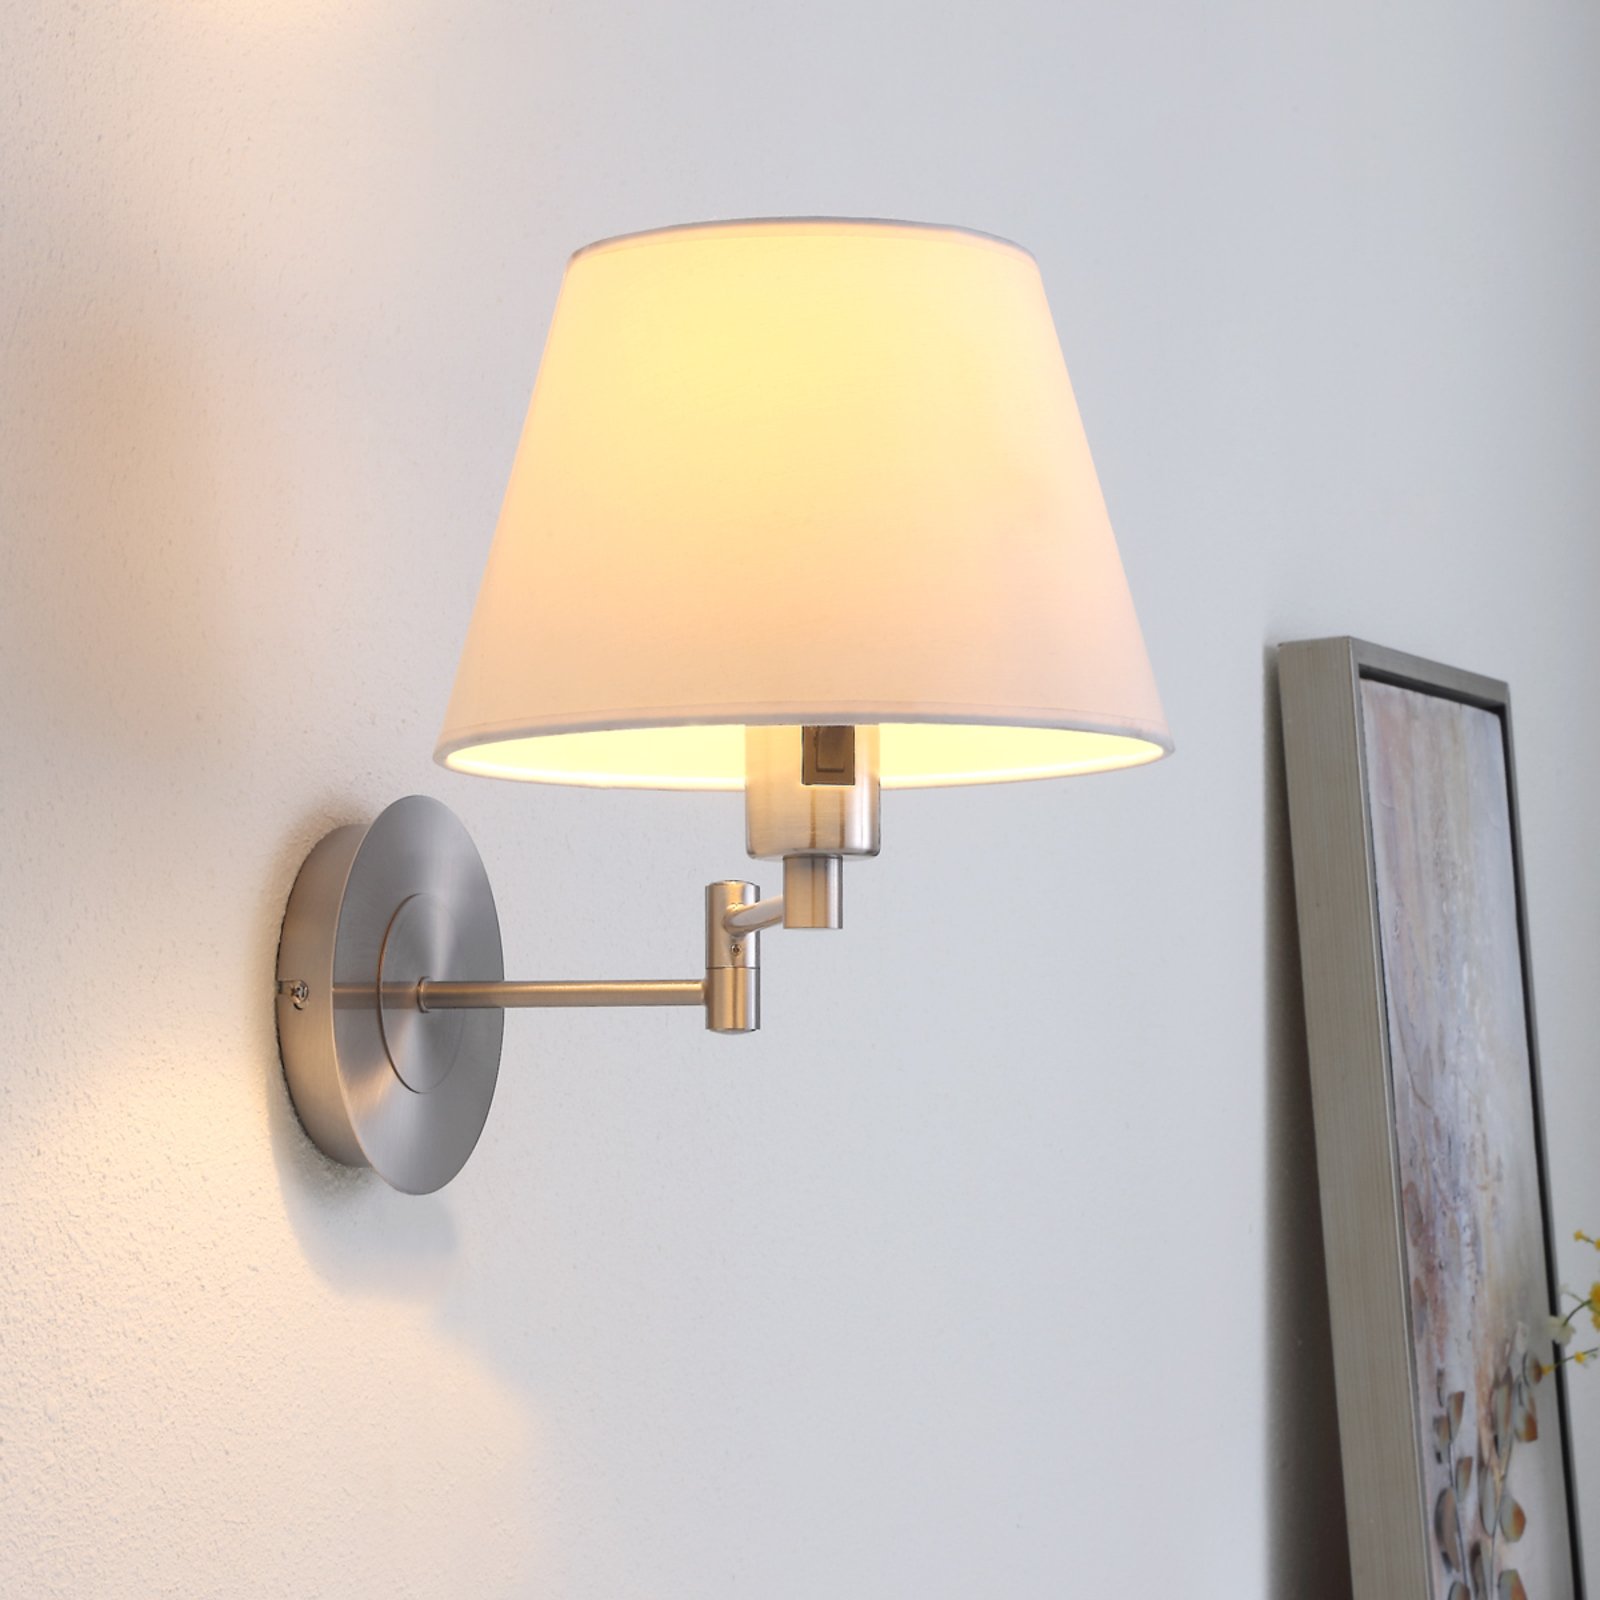 Pola wall light, extendible lampshade, nickel matt